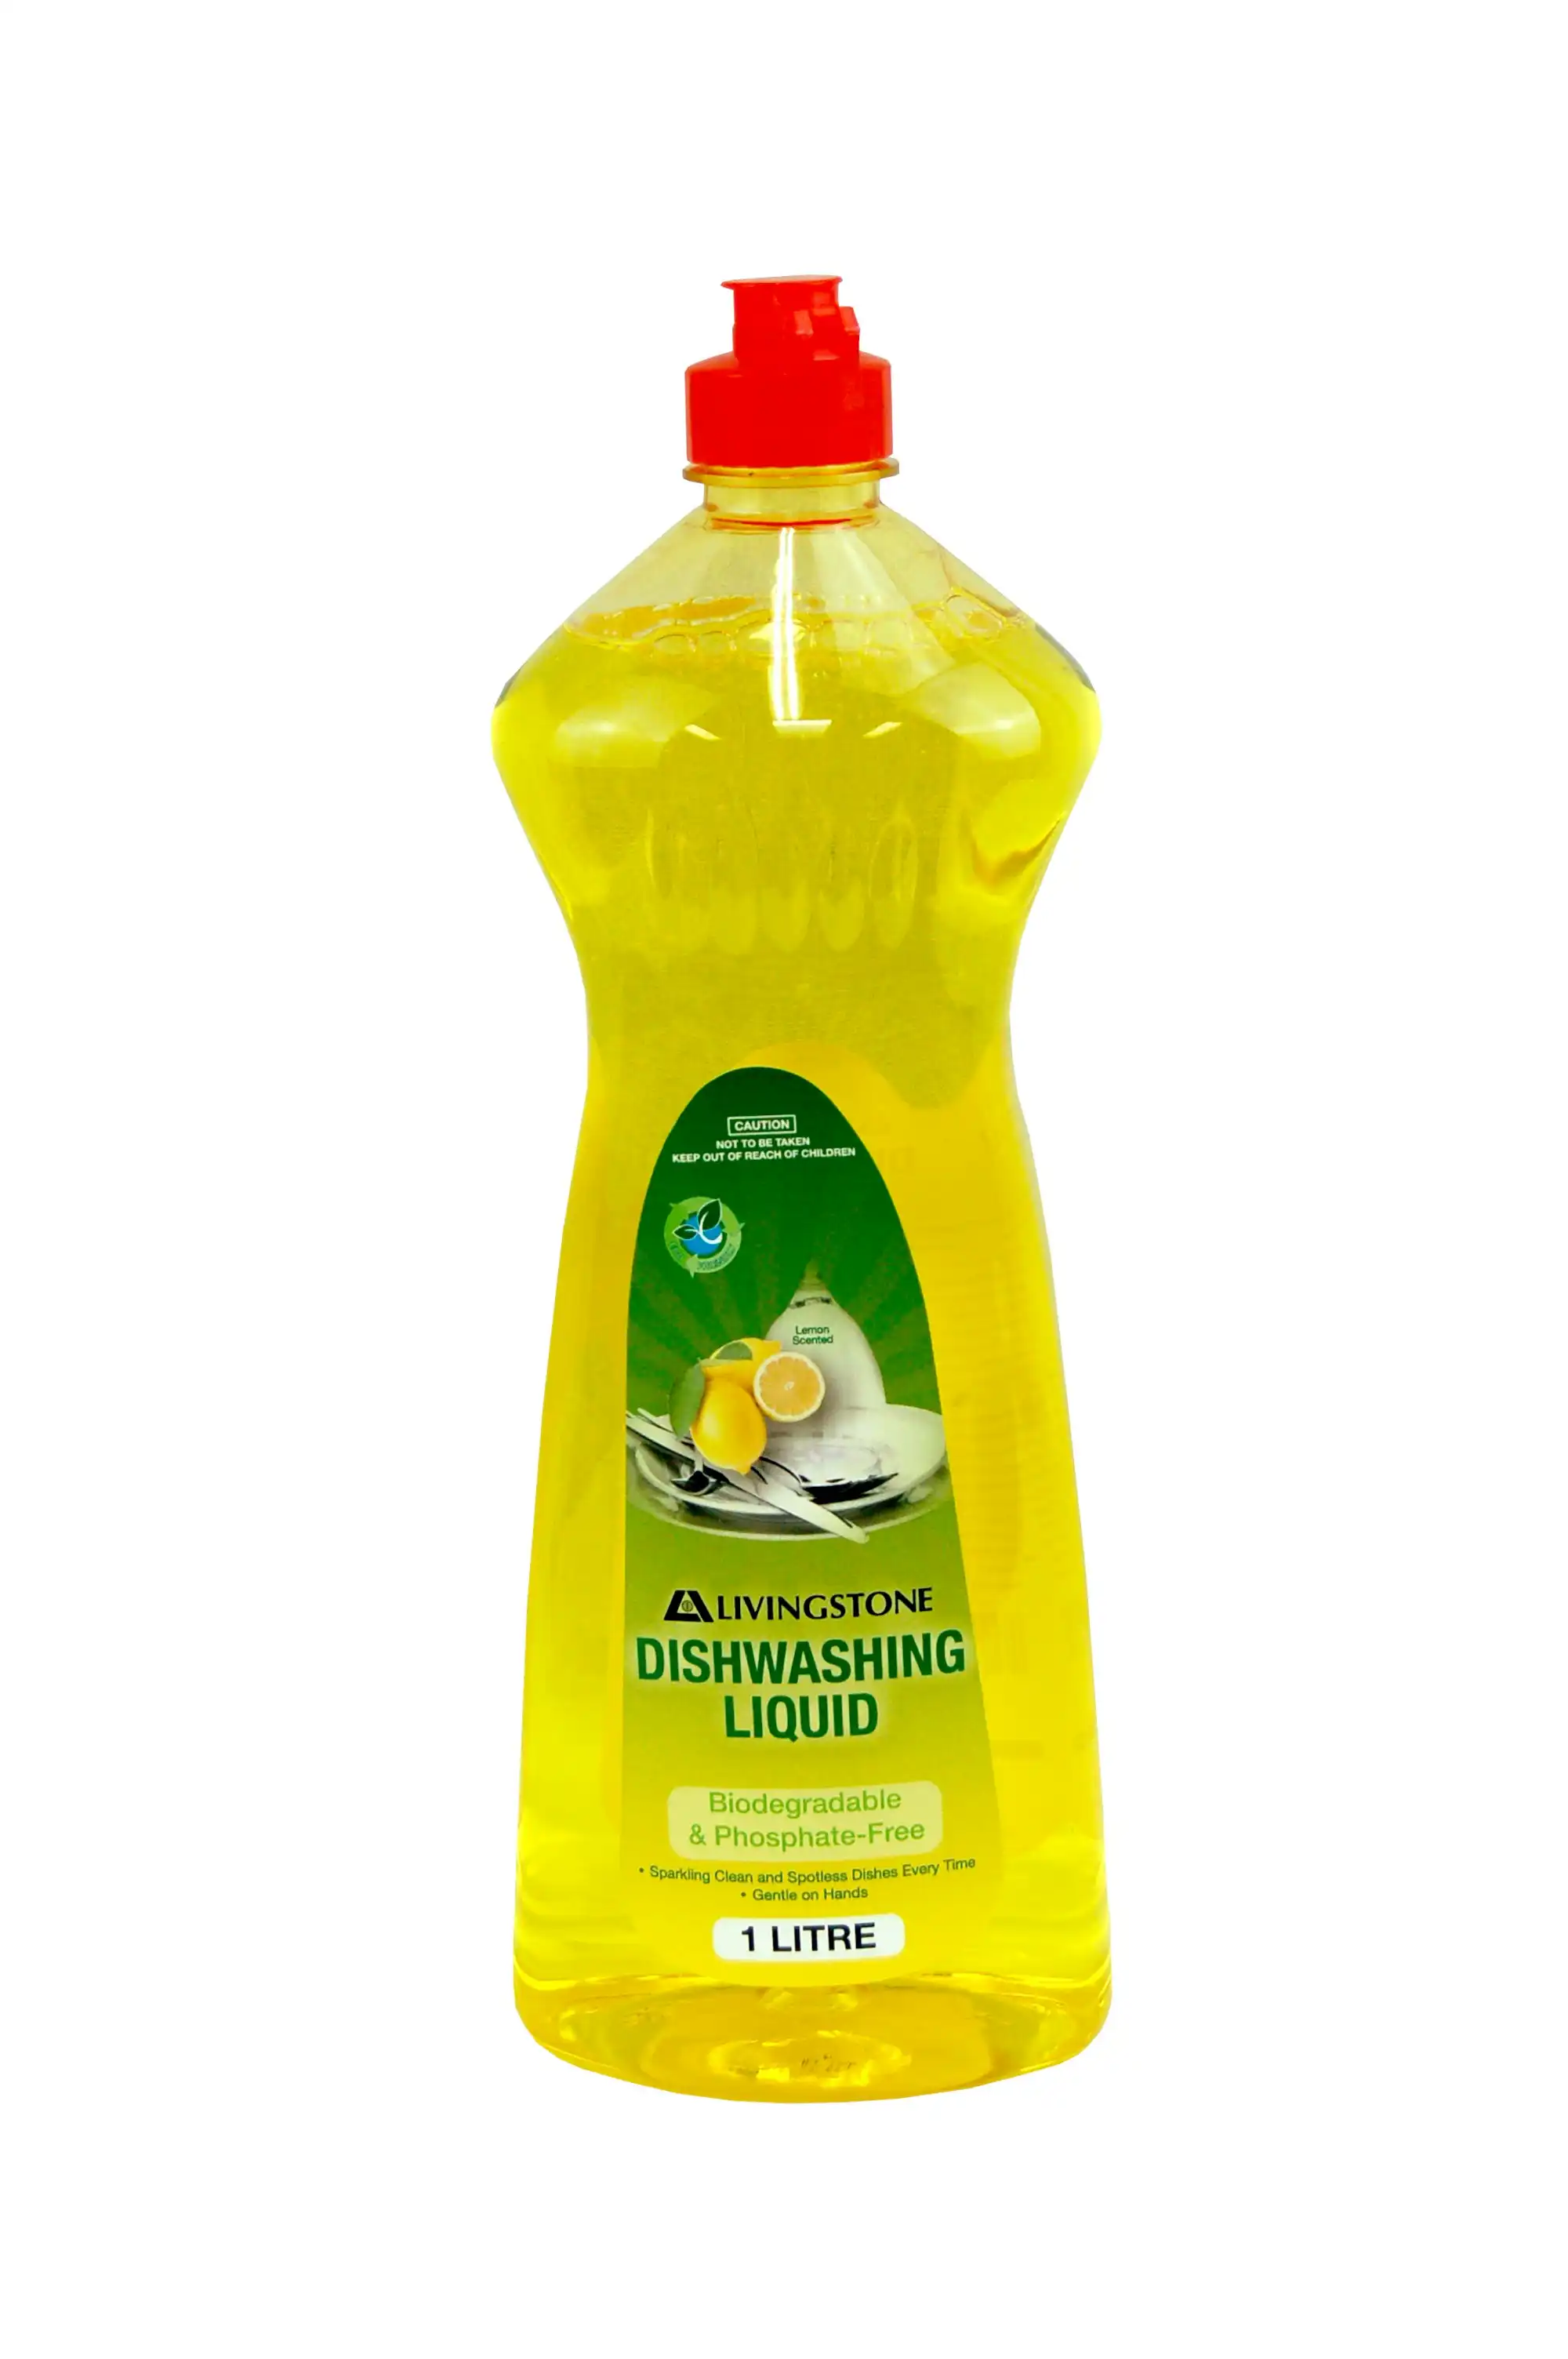 Livingstone Dishwashing Liquid Detergent 1L Bottle Lemon Fragrance